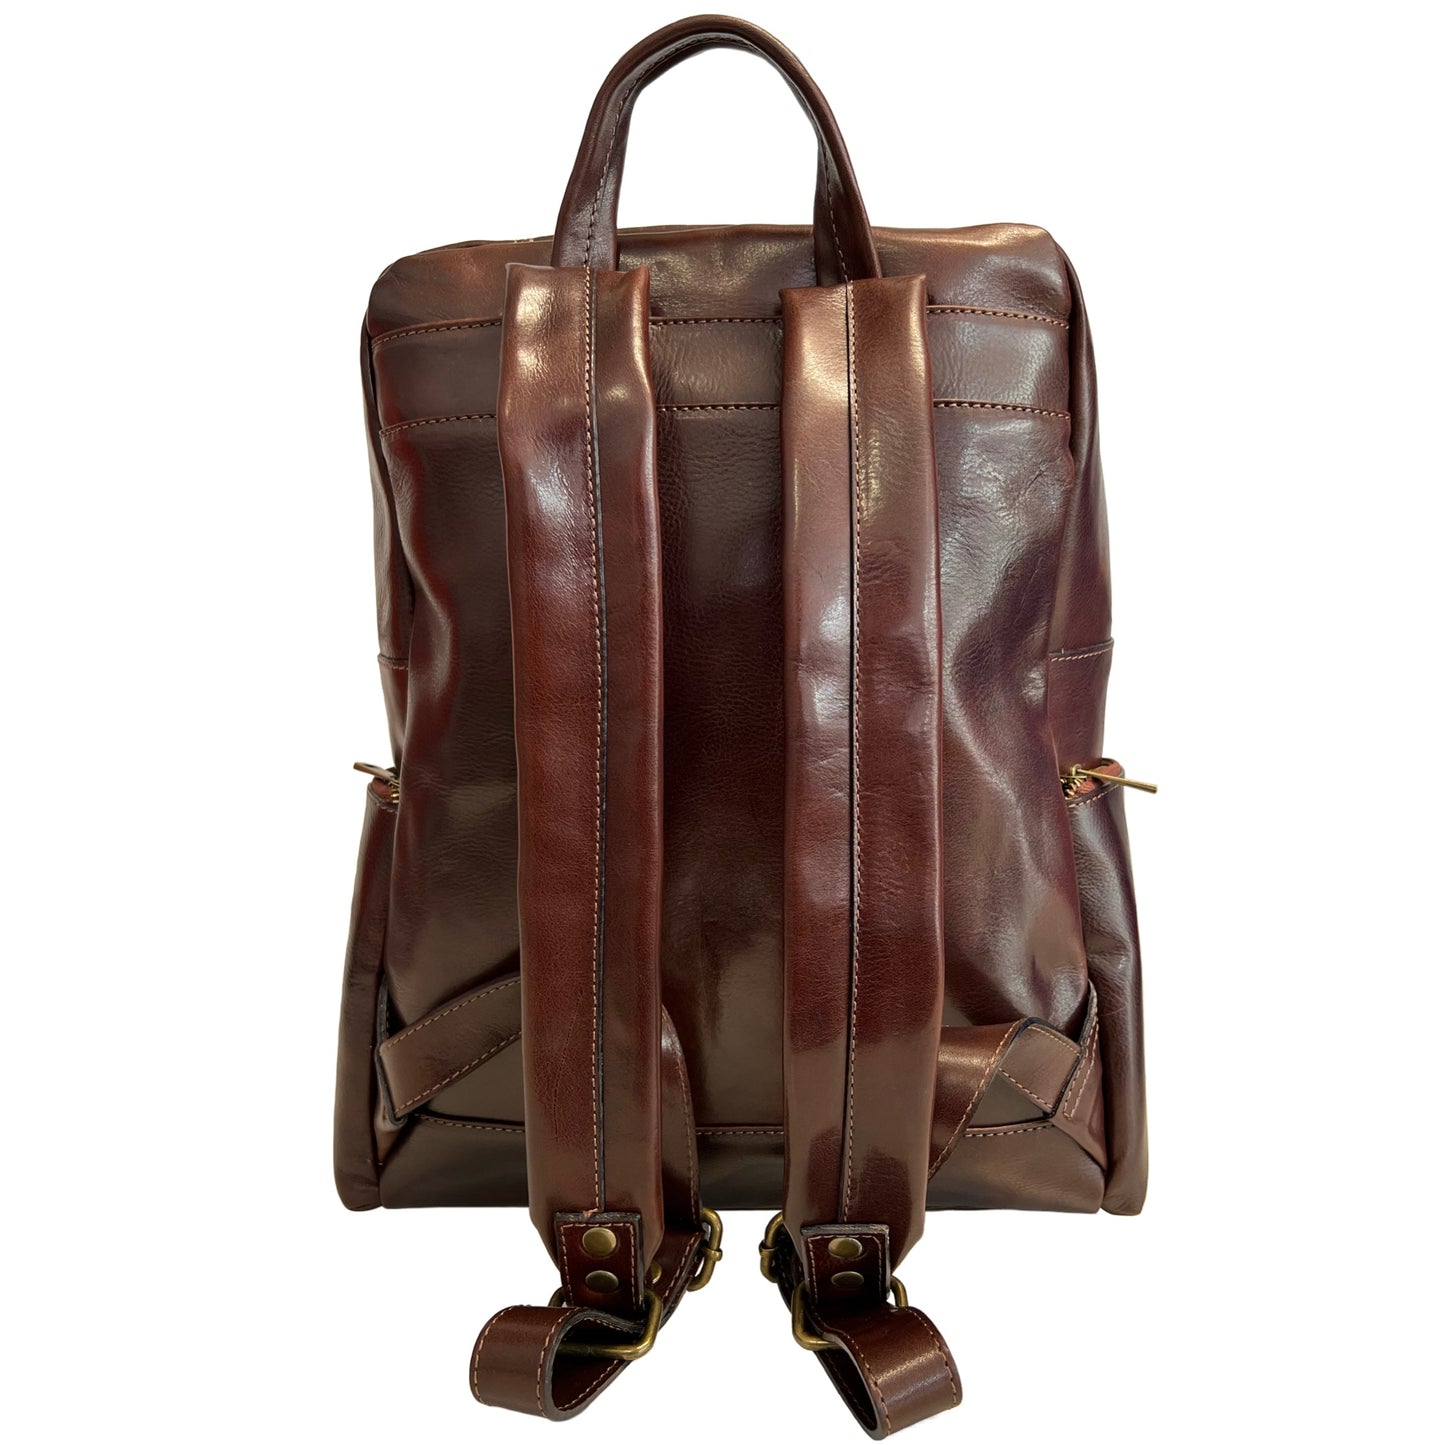 La Divina Commedia backpack in genuine brown leather